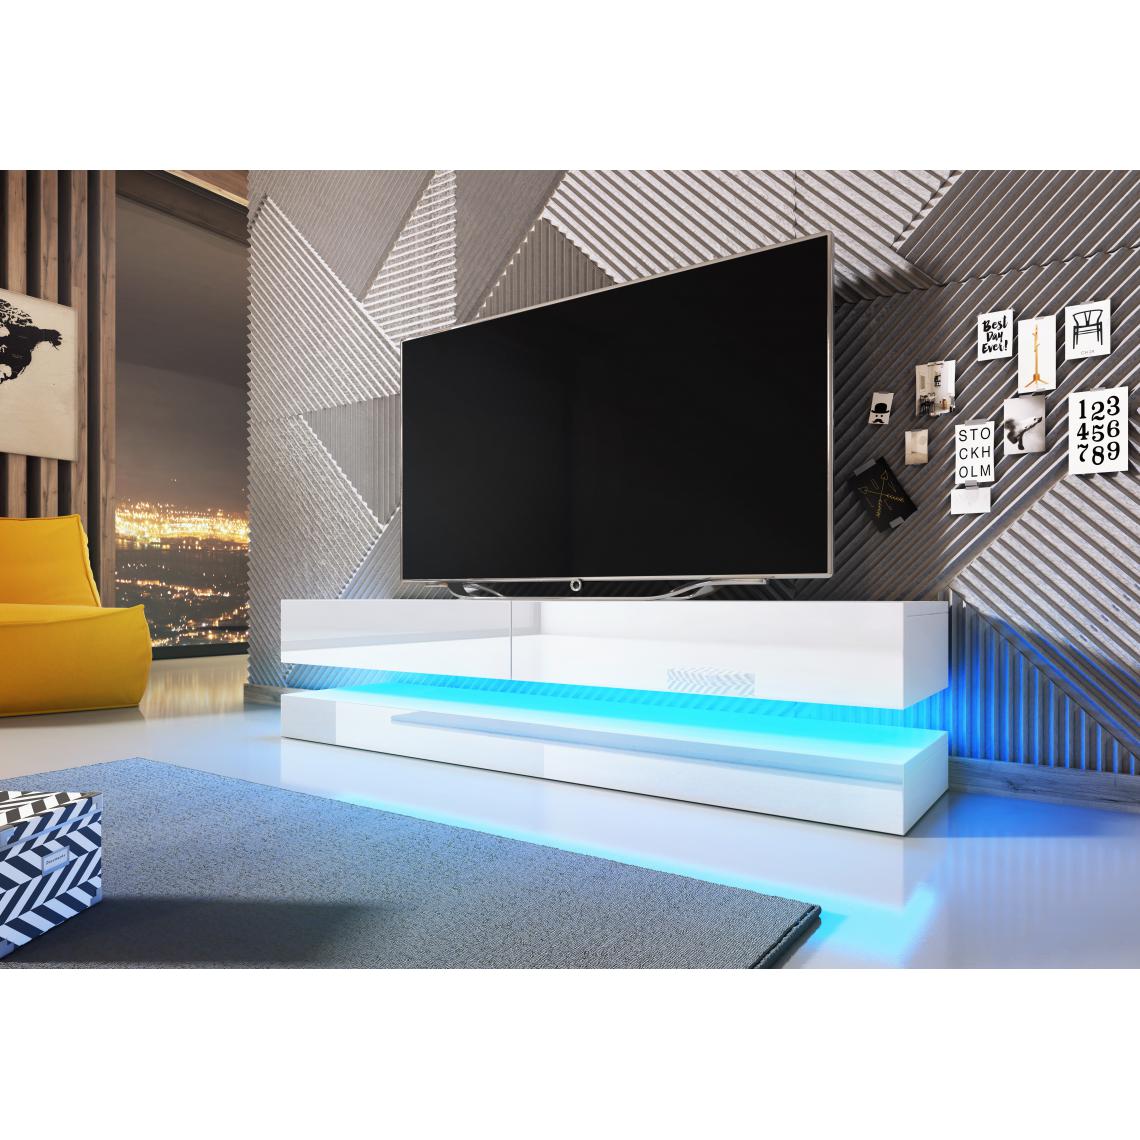 3xeliving - Table TV innovante et moderne Sajna avec éclairage LED, 140cm, blanc / blanc brillant - Meubles TV, Hi-Fi